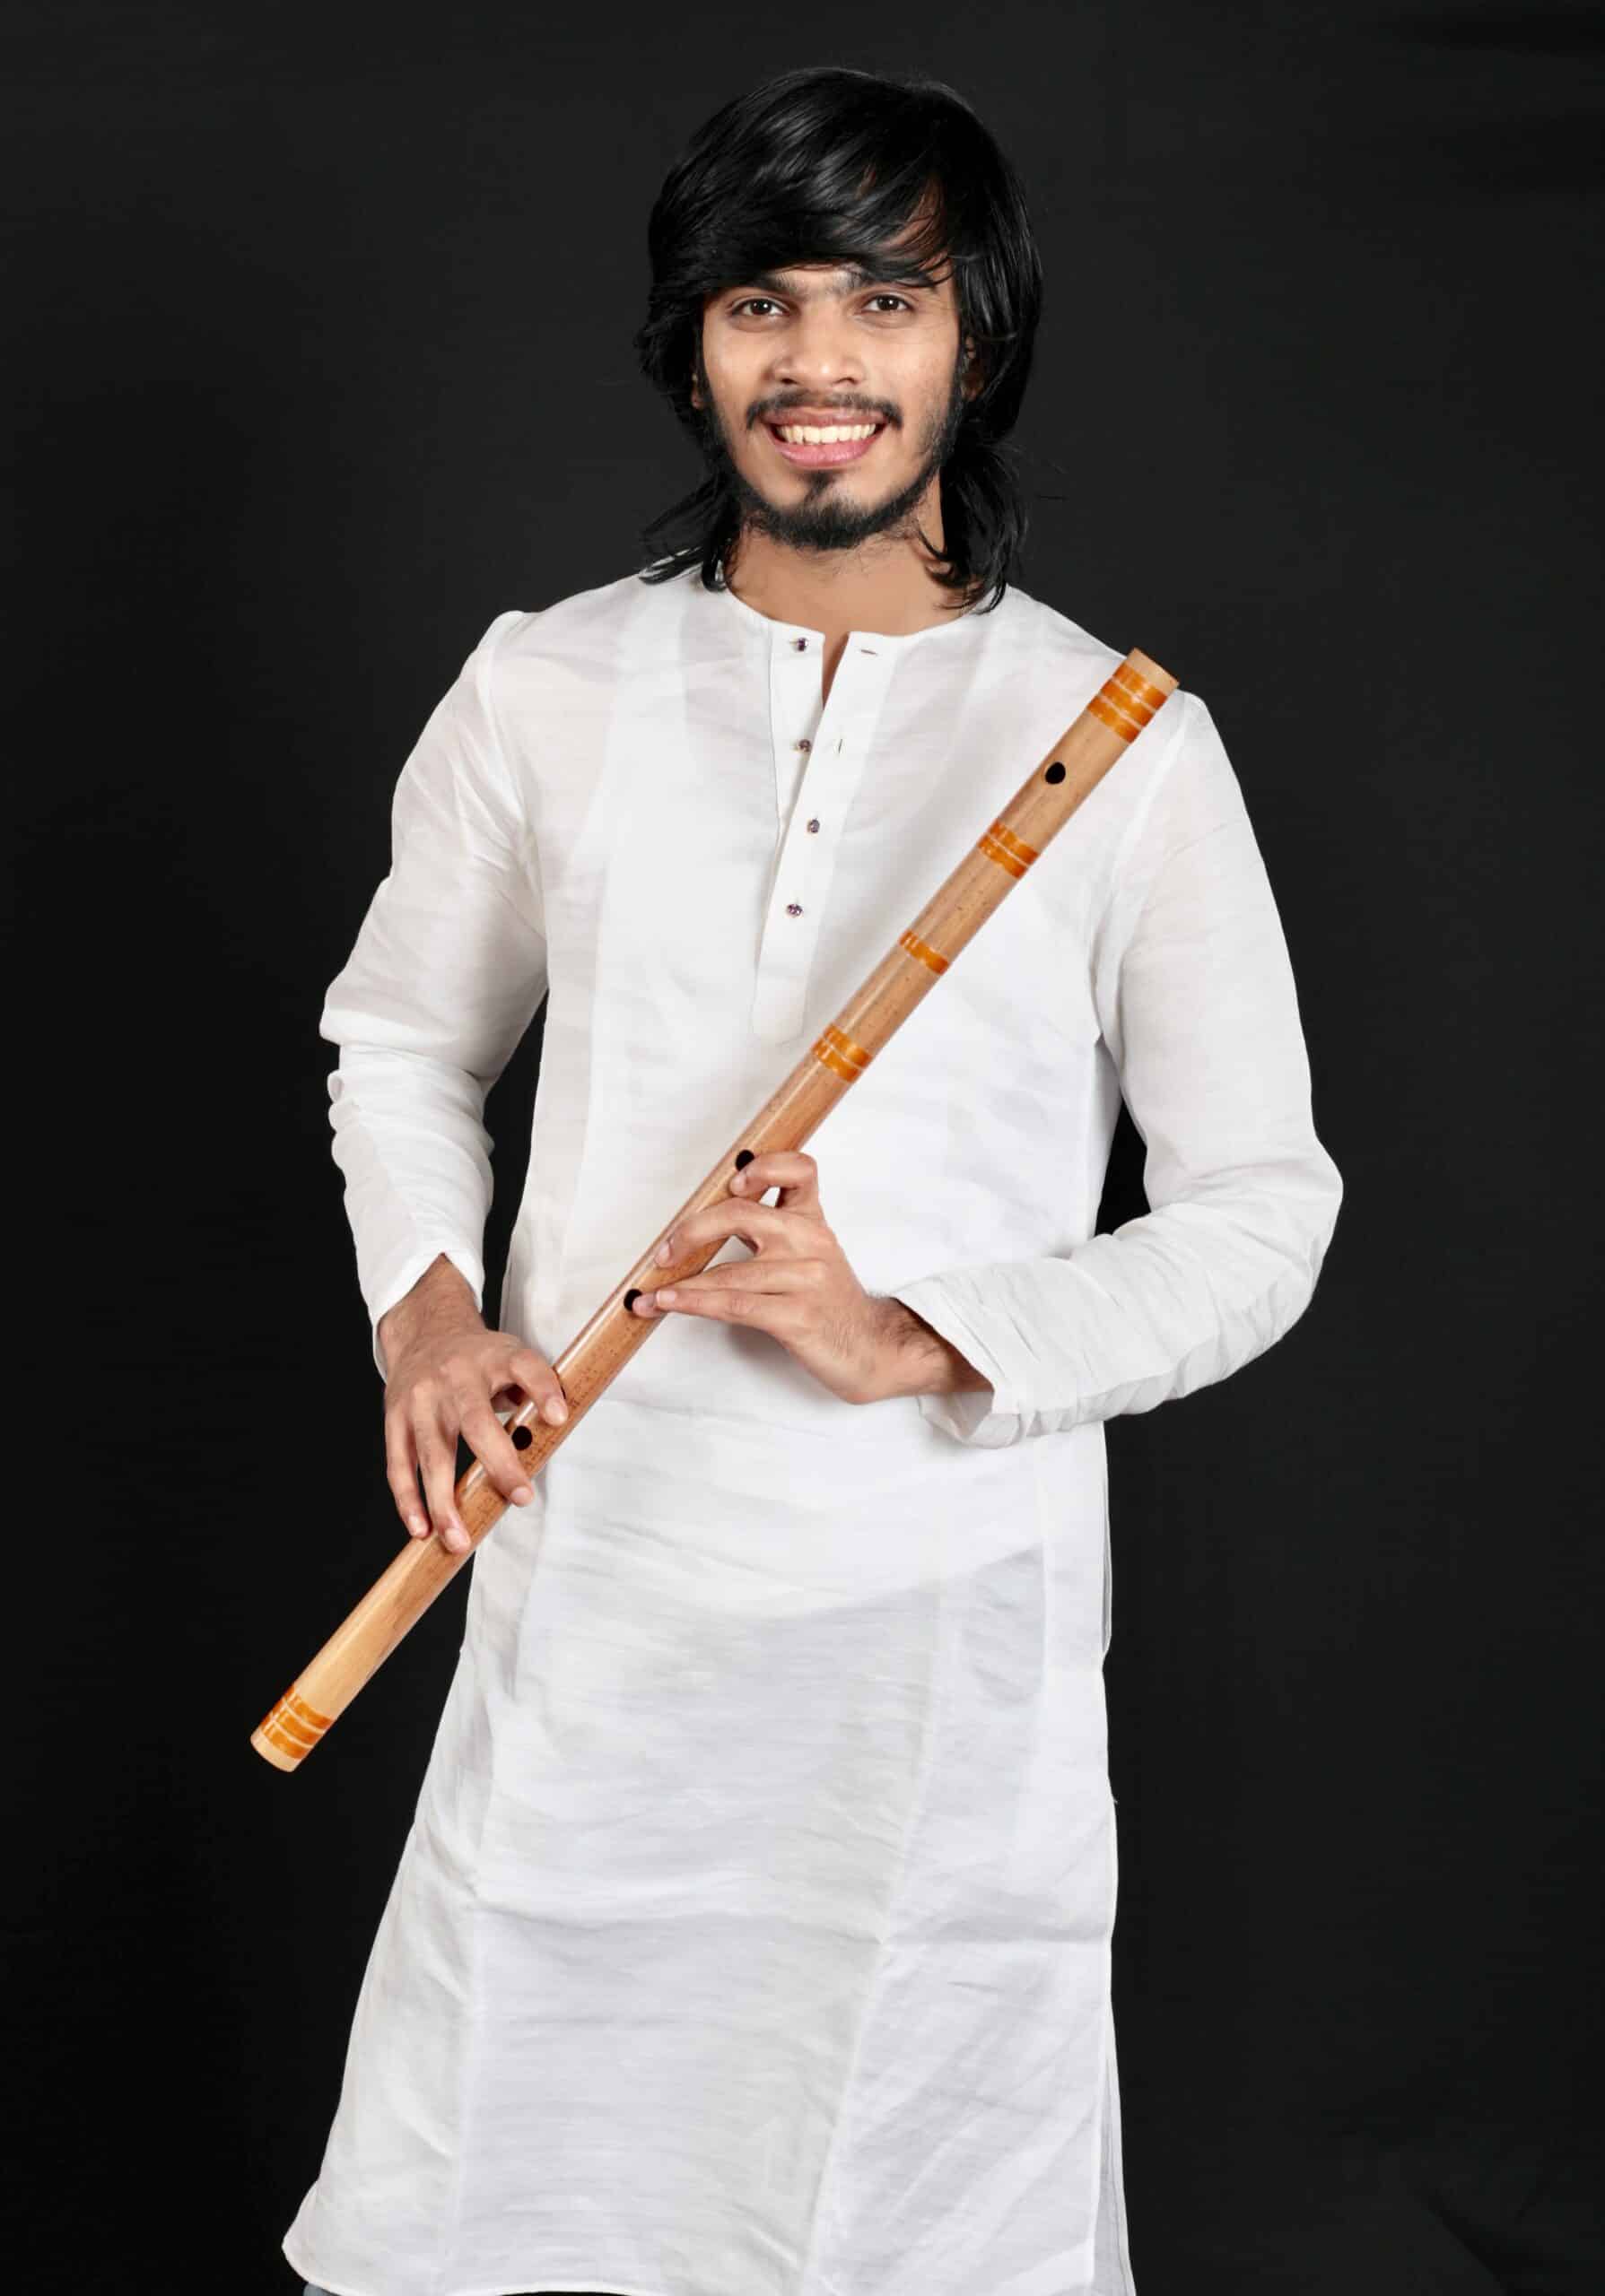 Hindustani classical flute player S. Akash